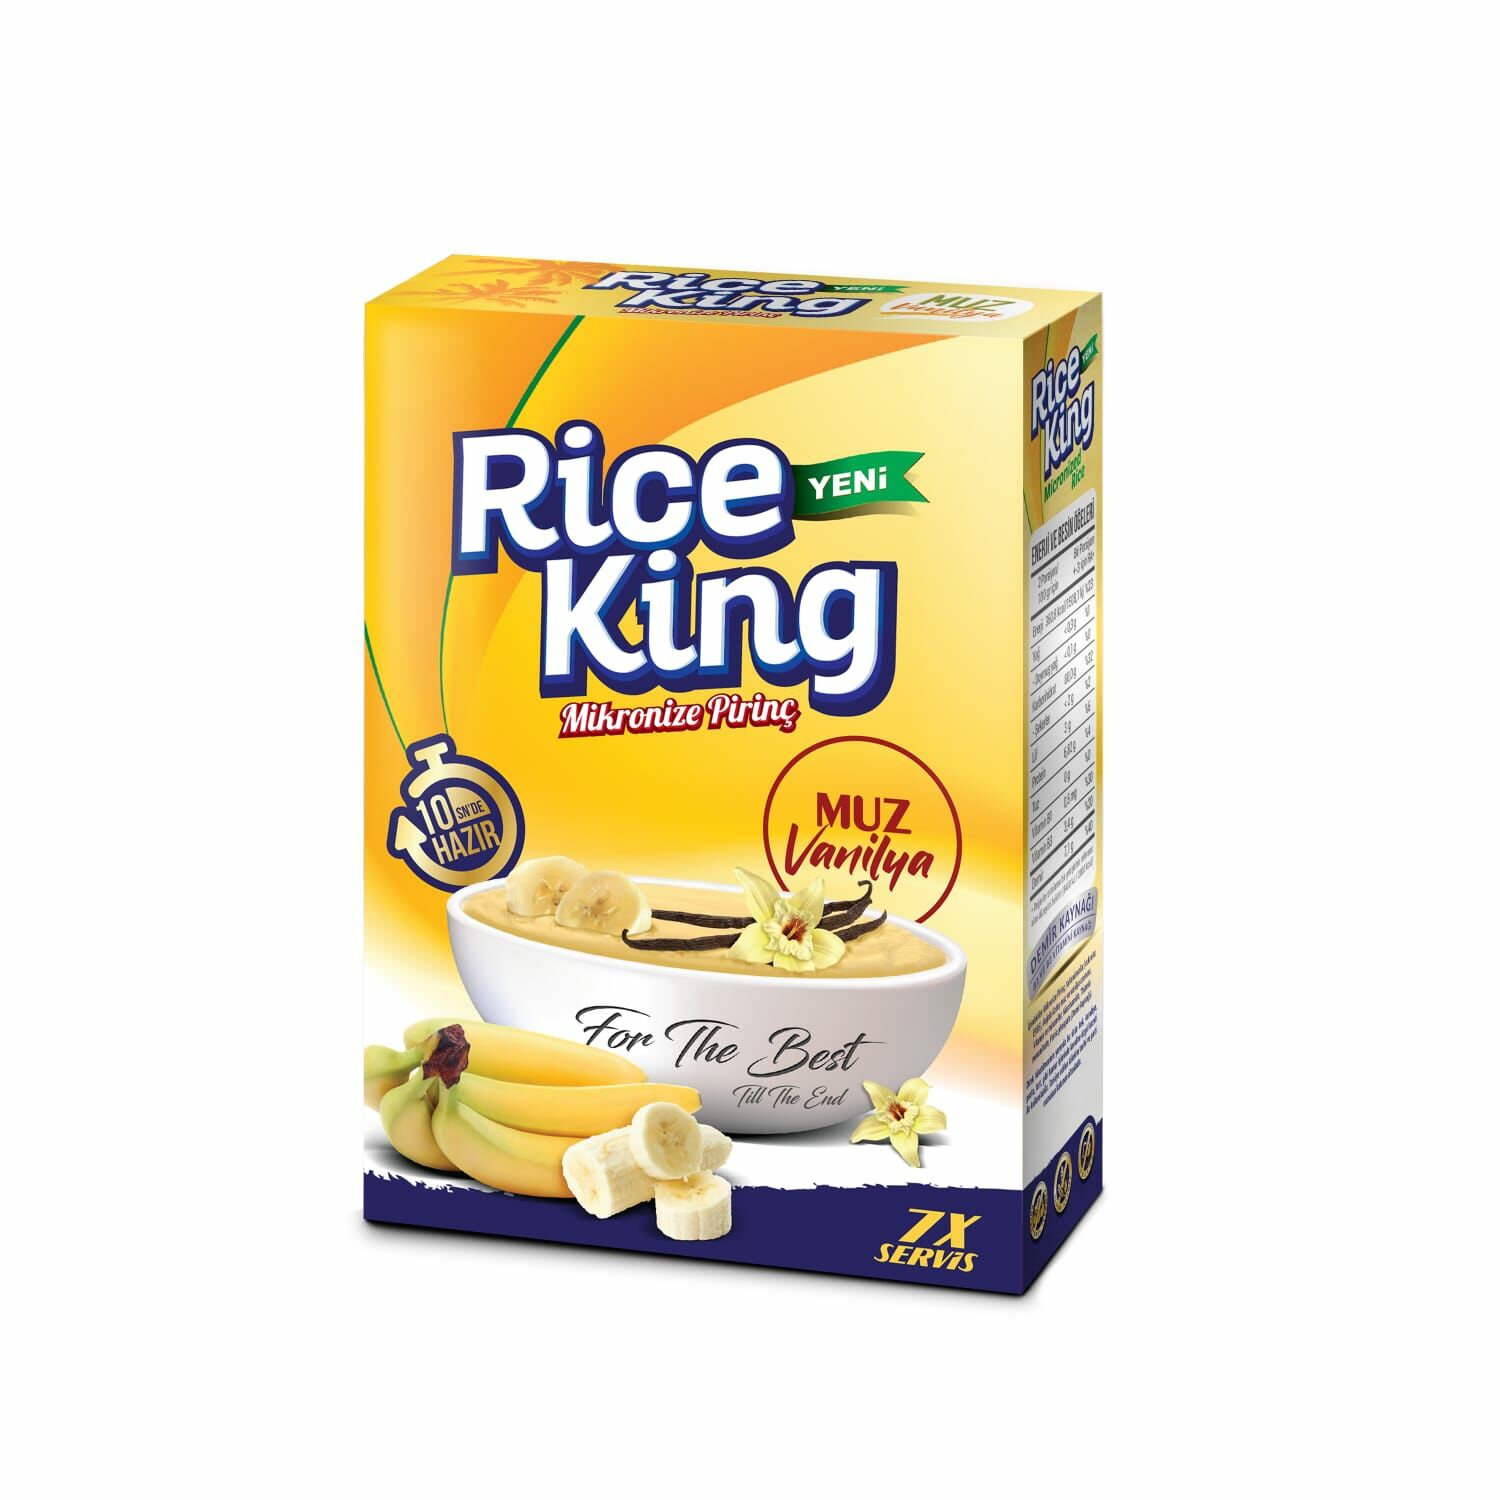 Rice King Mikronize Pirinç Muz&vanilya 350 Gr